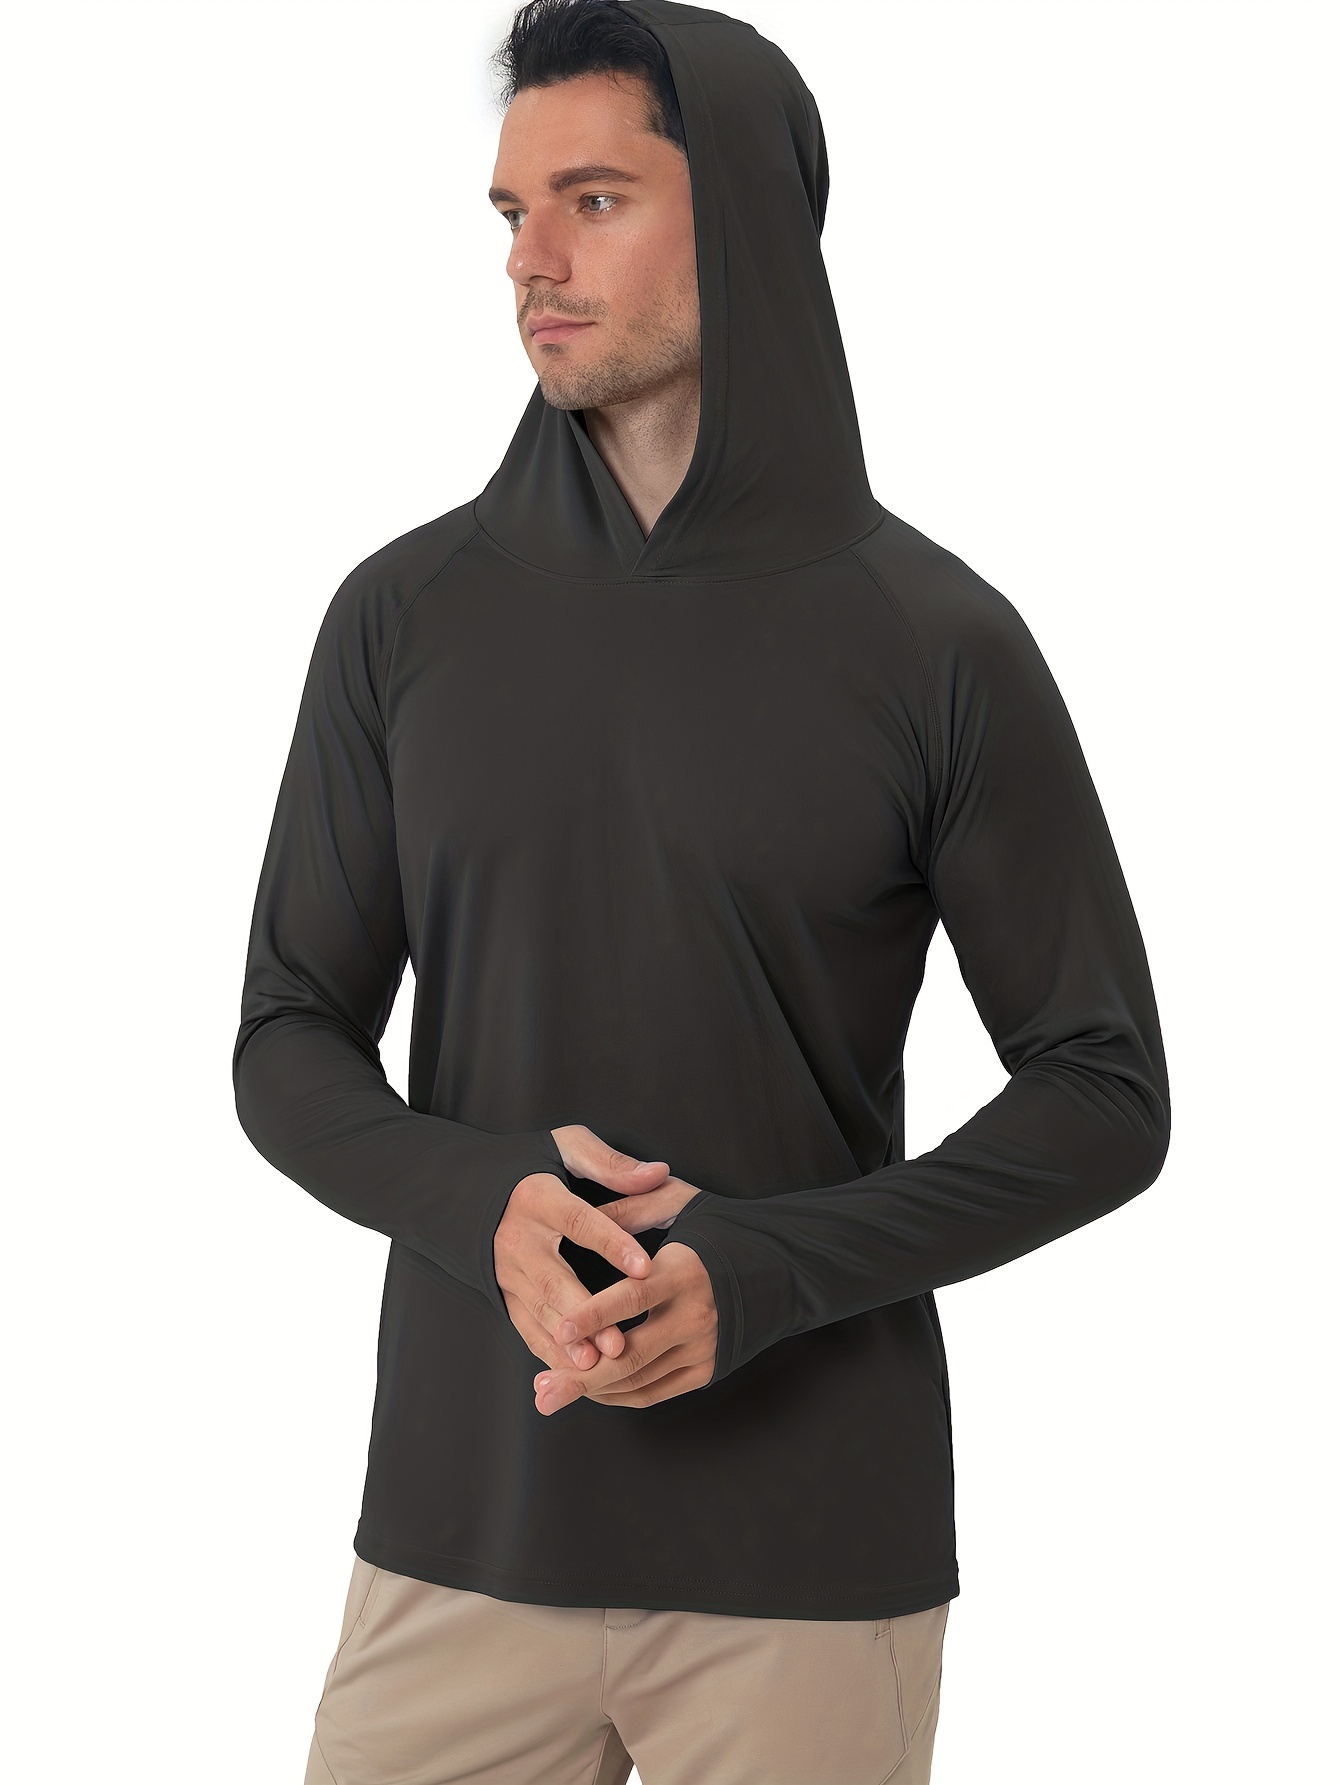 Men's UPF 50+ Sun Protection Hoodie, Long Sleeve Comfy Quick Dry Tops For Men's Outdoor Fishing Activities